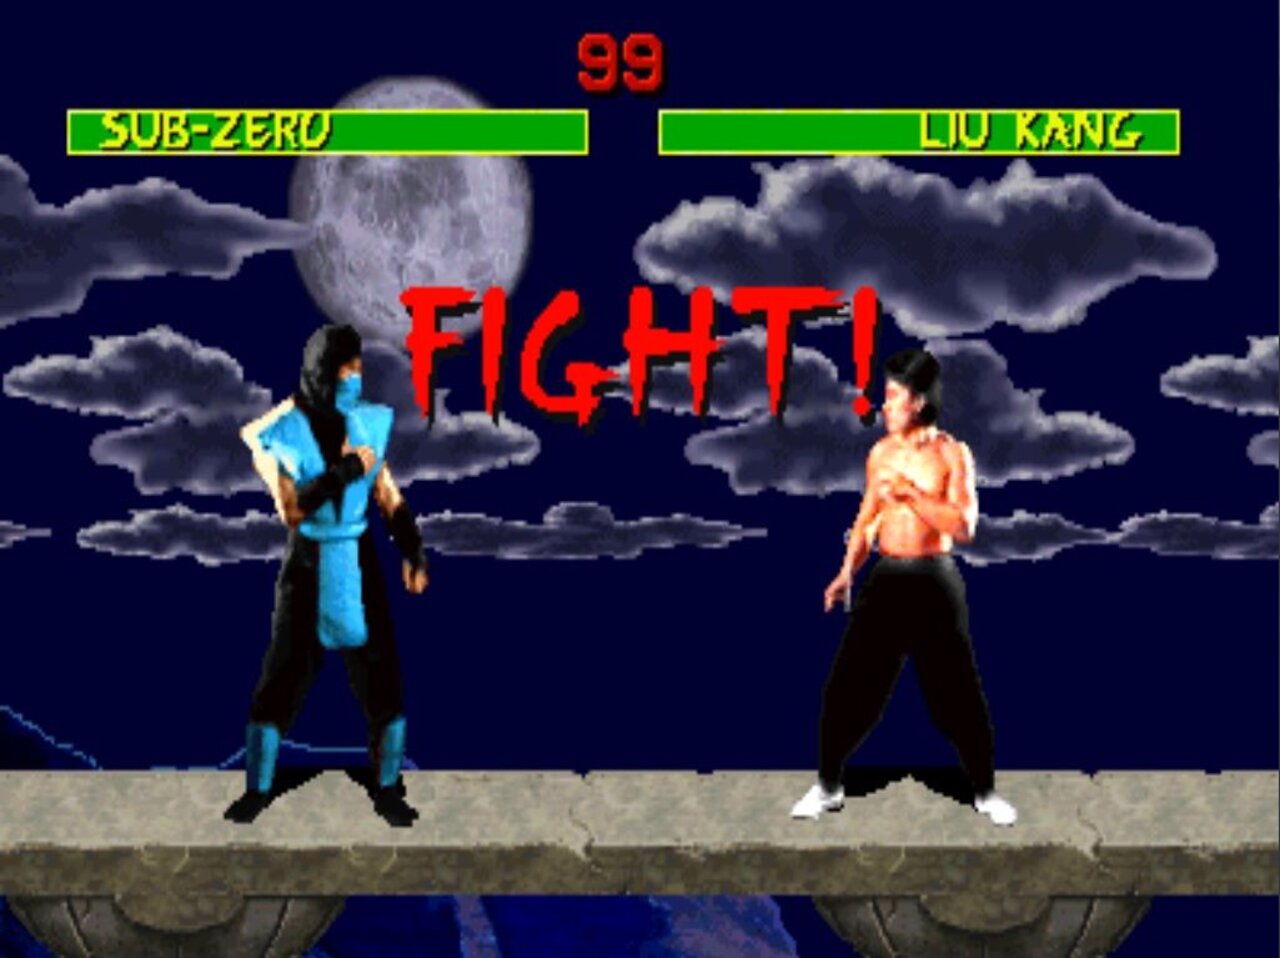 Mortal Kombat vs. Street Fighter Possible - Cheat Code Central